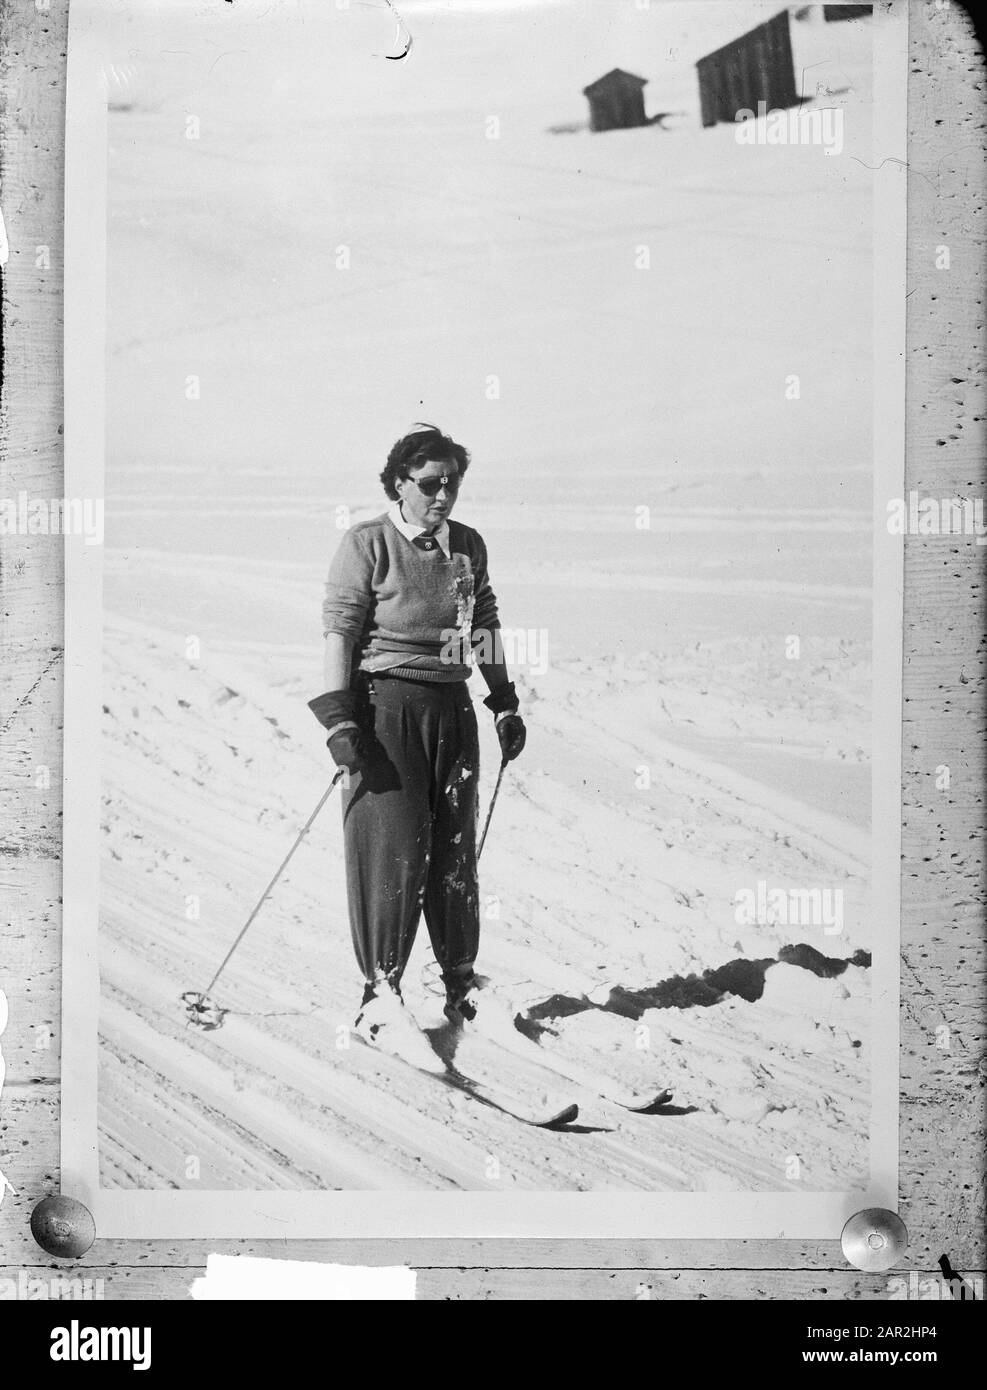 Queen Juliana in Sankt Anton on skis Date: May 12, 1950 Location: Austria, Sankt Anton am Arlberg, Tirol Keywords: queen, skis, snow, winter sports Personal name: Juliana (queen Netherlands), Juliana, queen Stock Photo